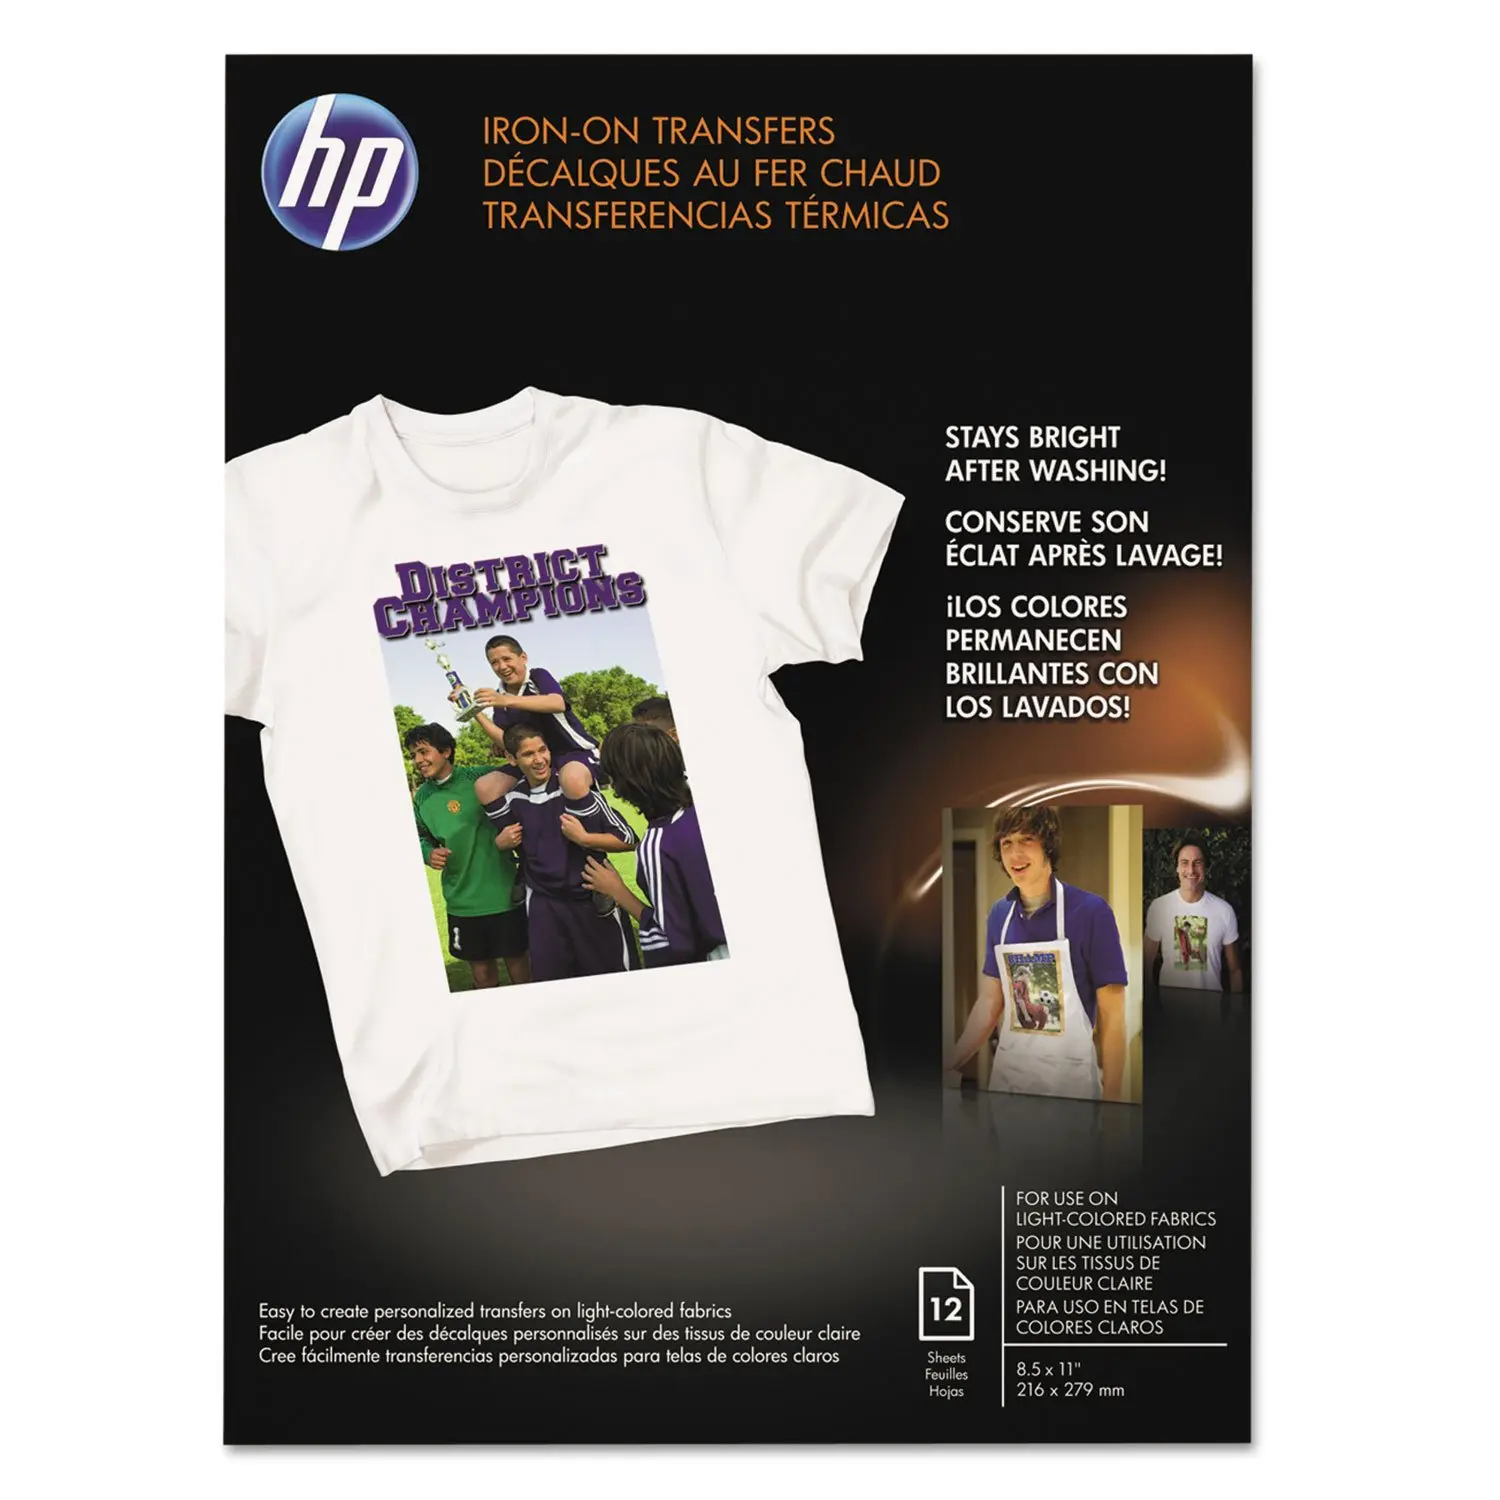 hewlett packard hp iron-on tshirt transfers a4 pk/12 - Can you use a regular printer for T shirt transfers